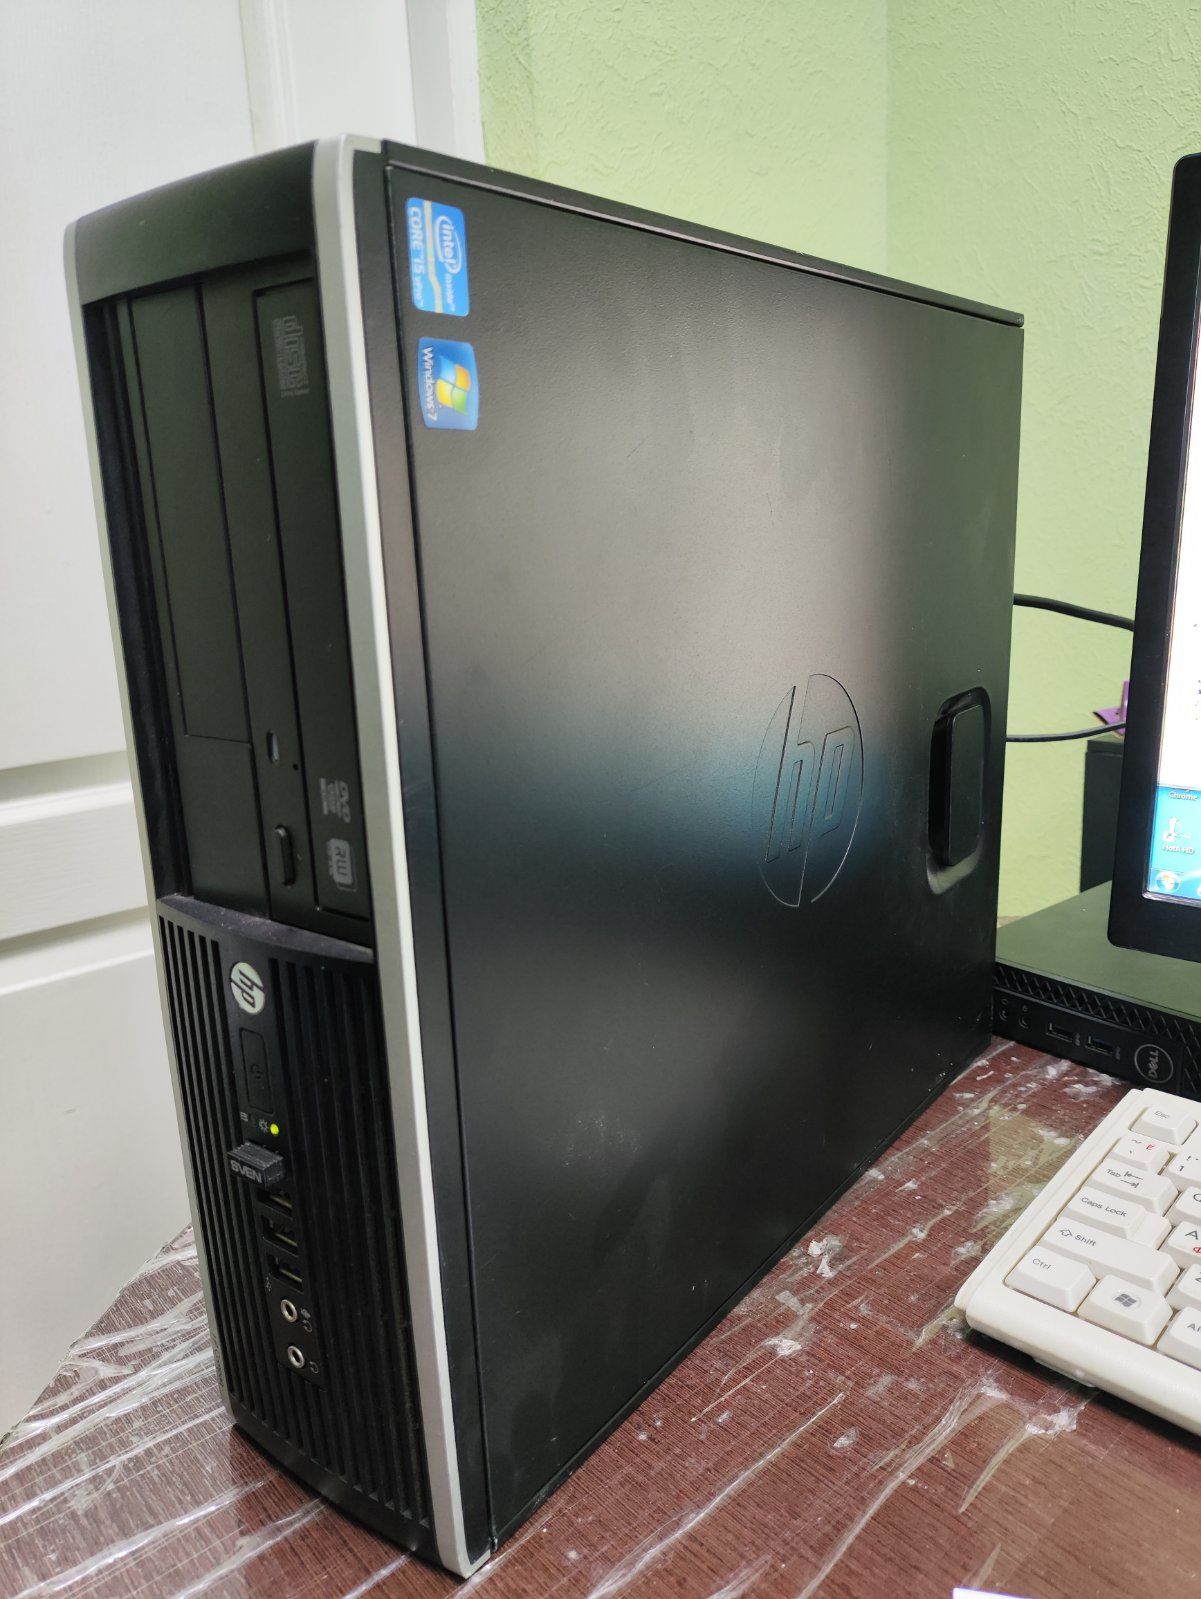 Системный блок
HP	Compaq Pro 6300 SFF 
Процессор: Intel Core I5-3470,